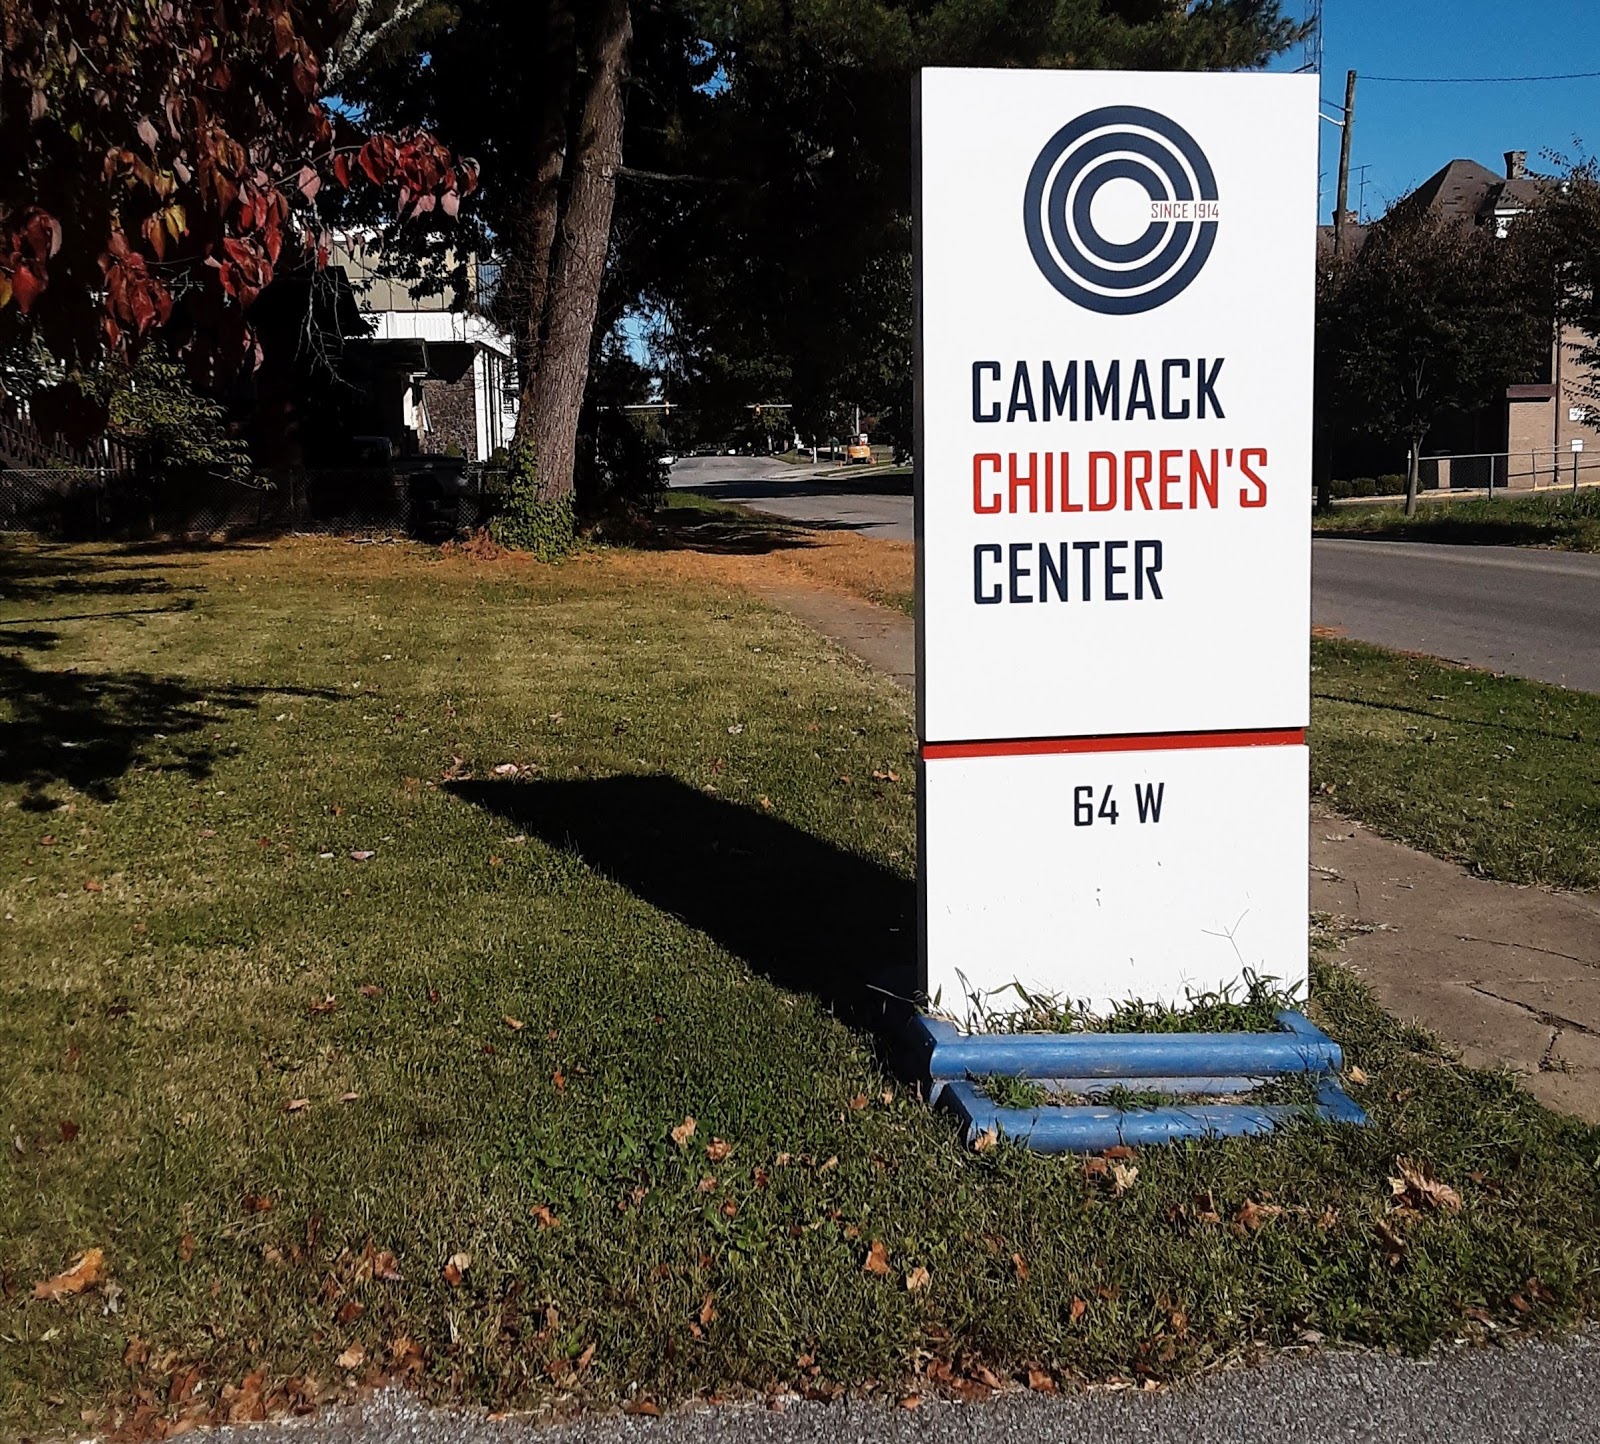 Cammack Children's Center